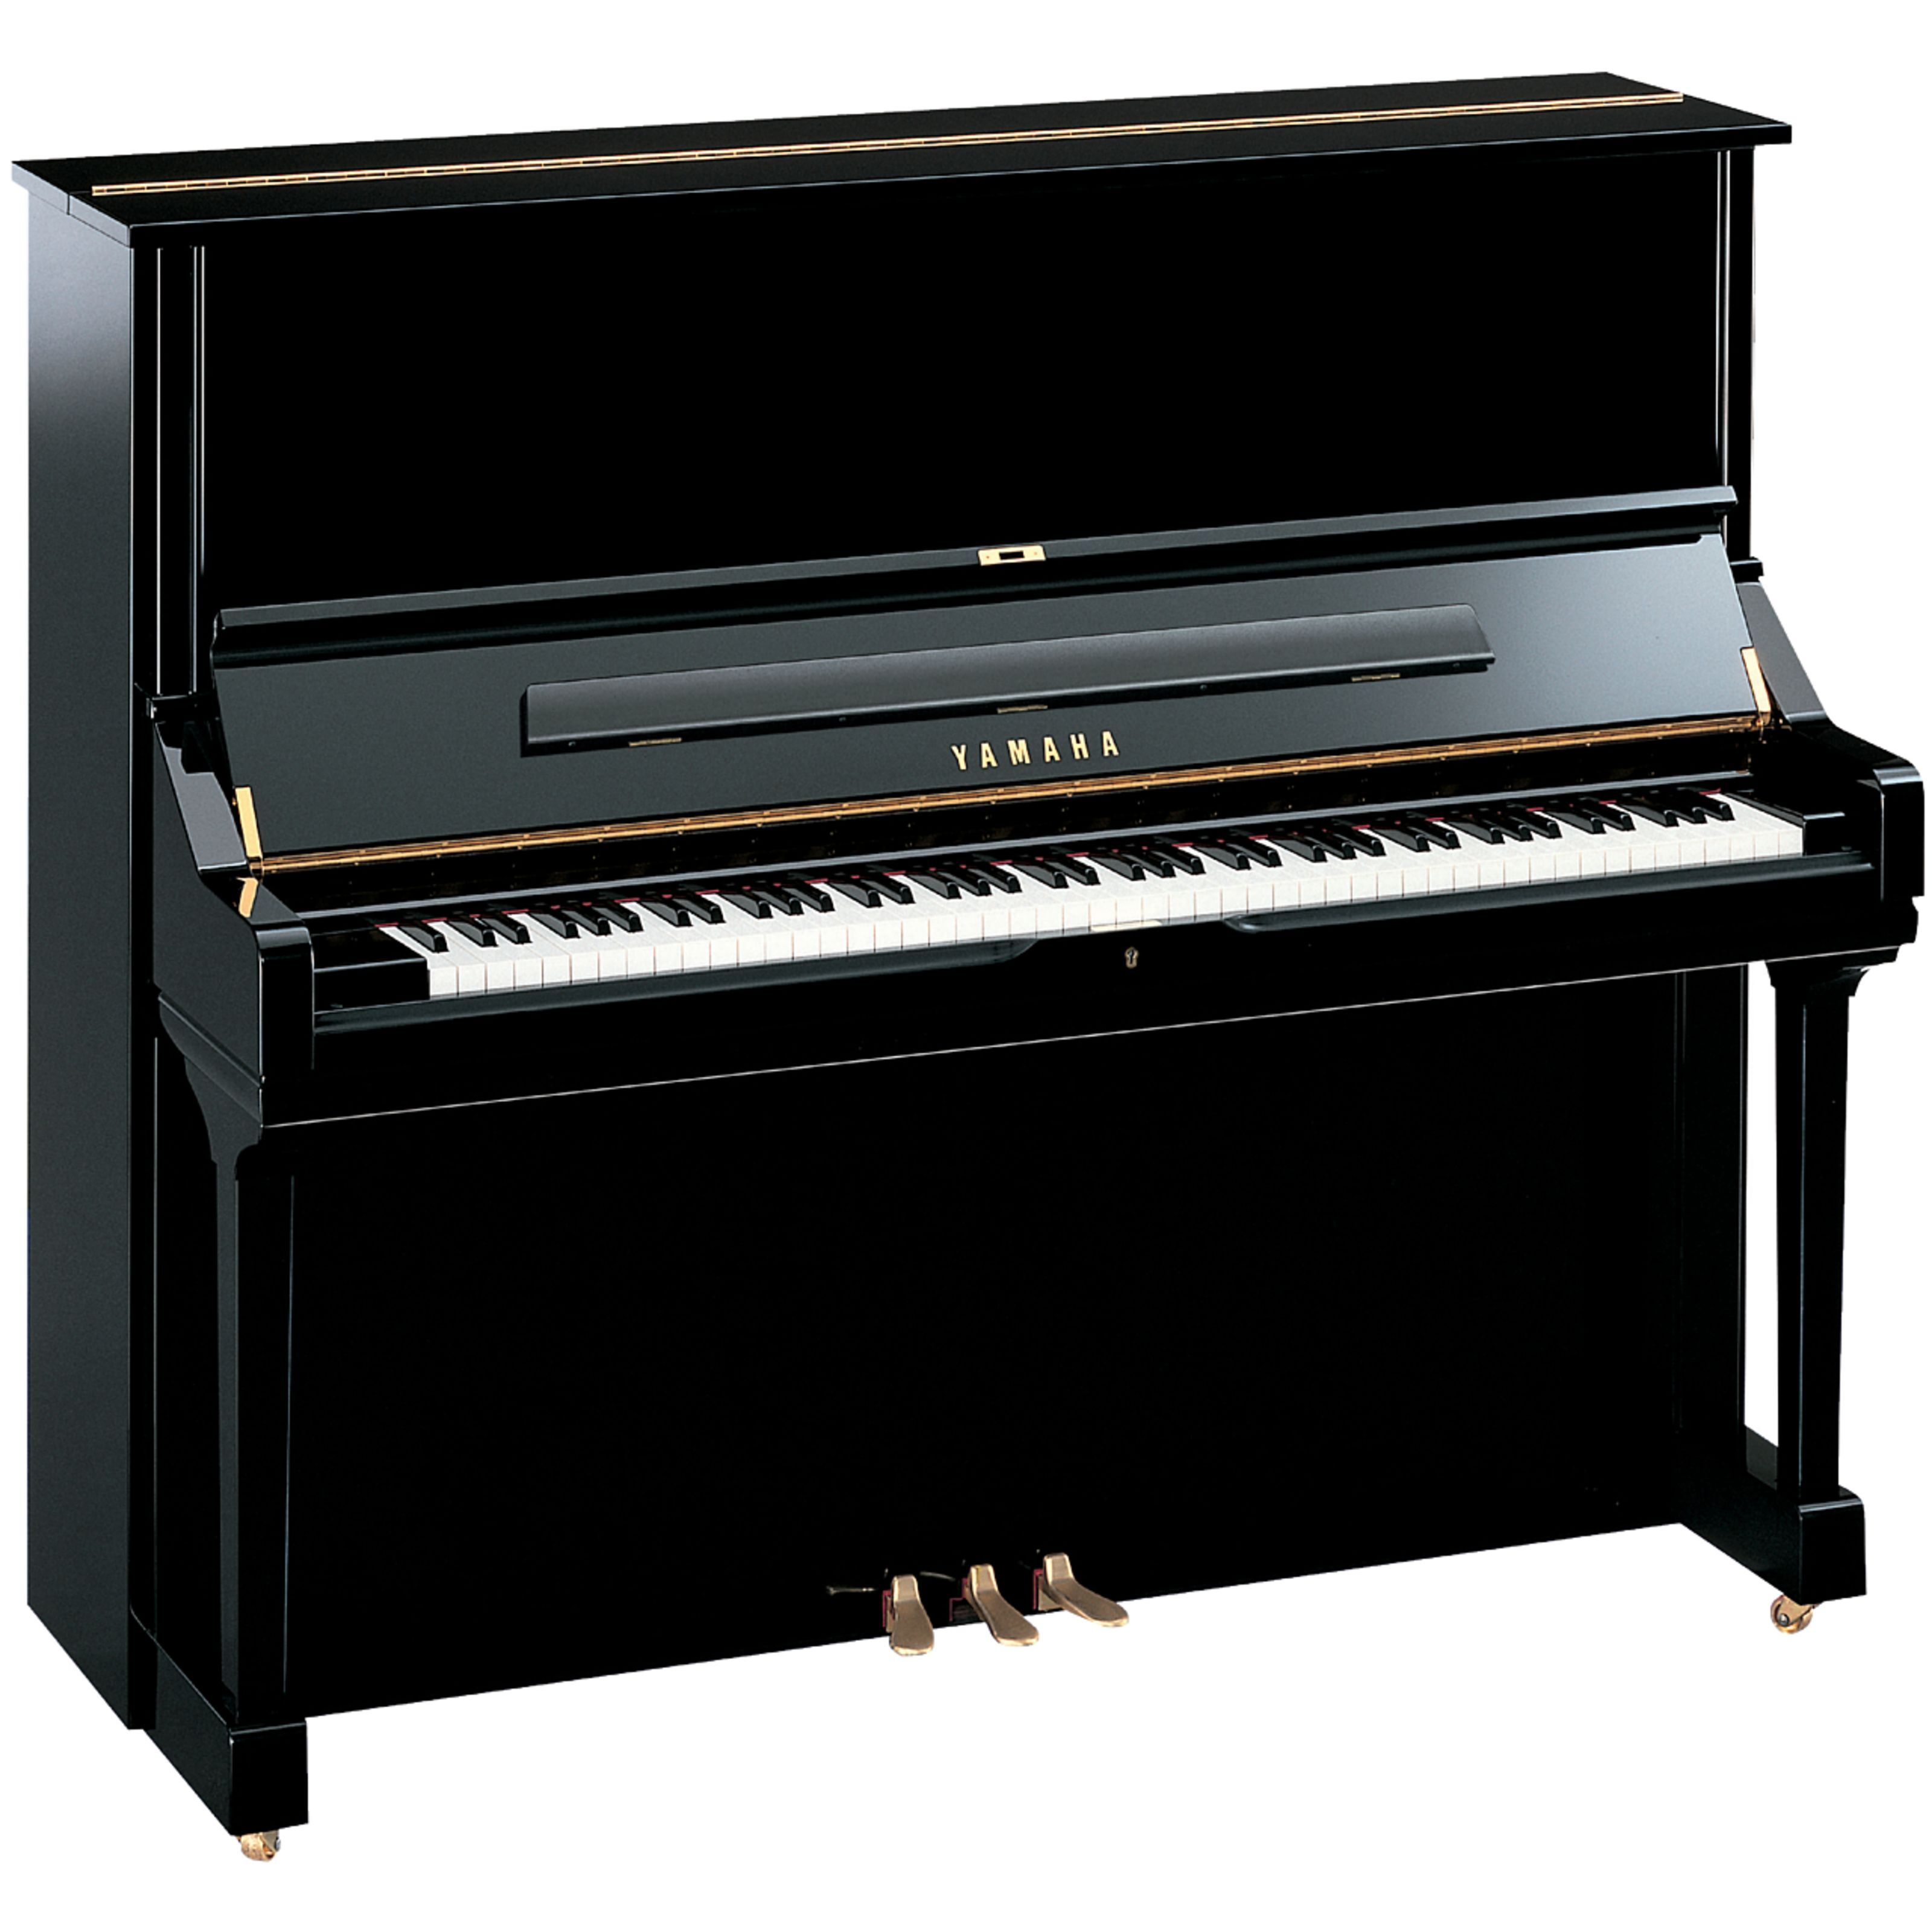 Yamaha U30BL Bj. '87 schw. pol., 131cm - Gebraucht Klavier